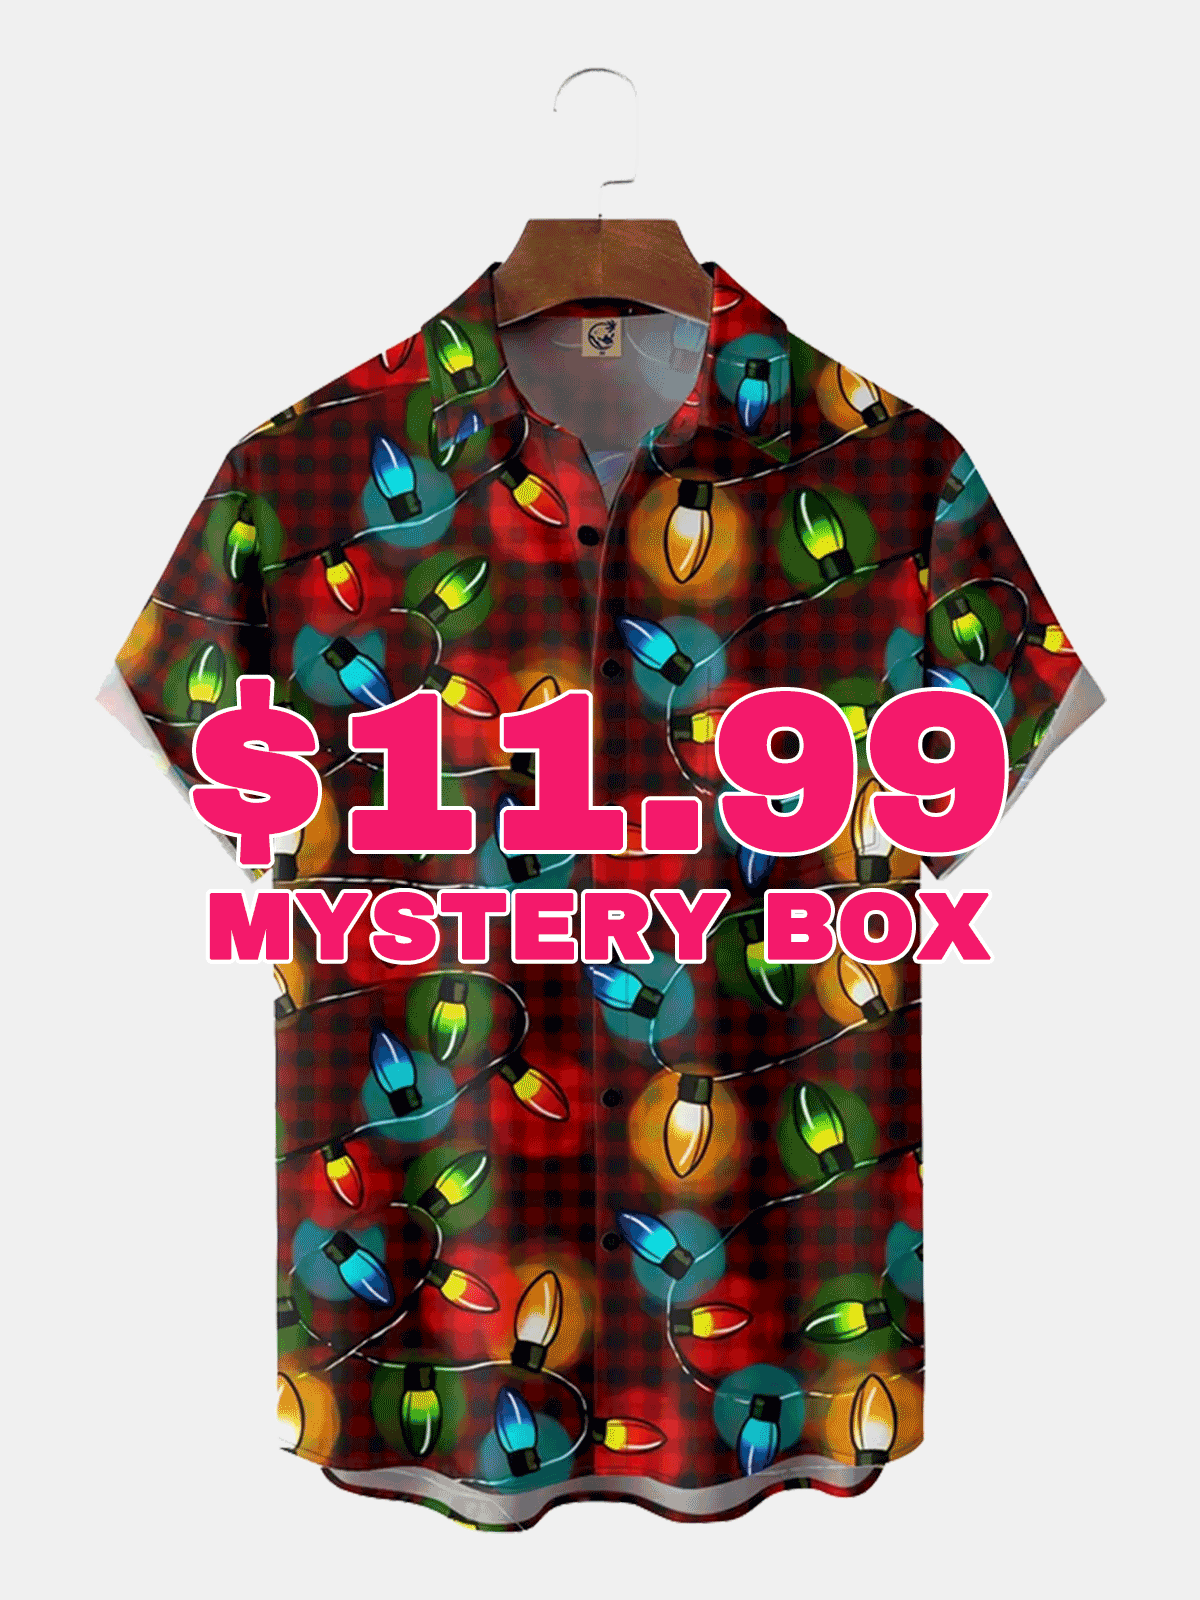 MYSTERY BOX $11.99